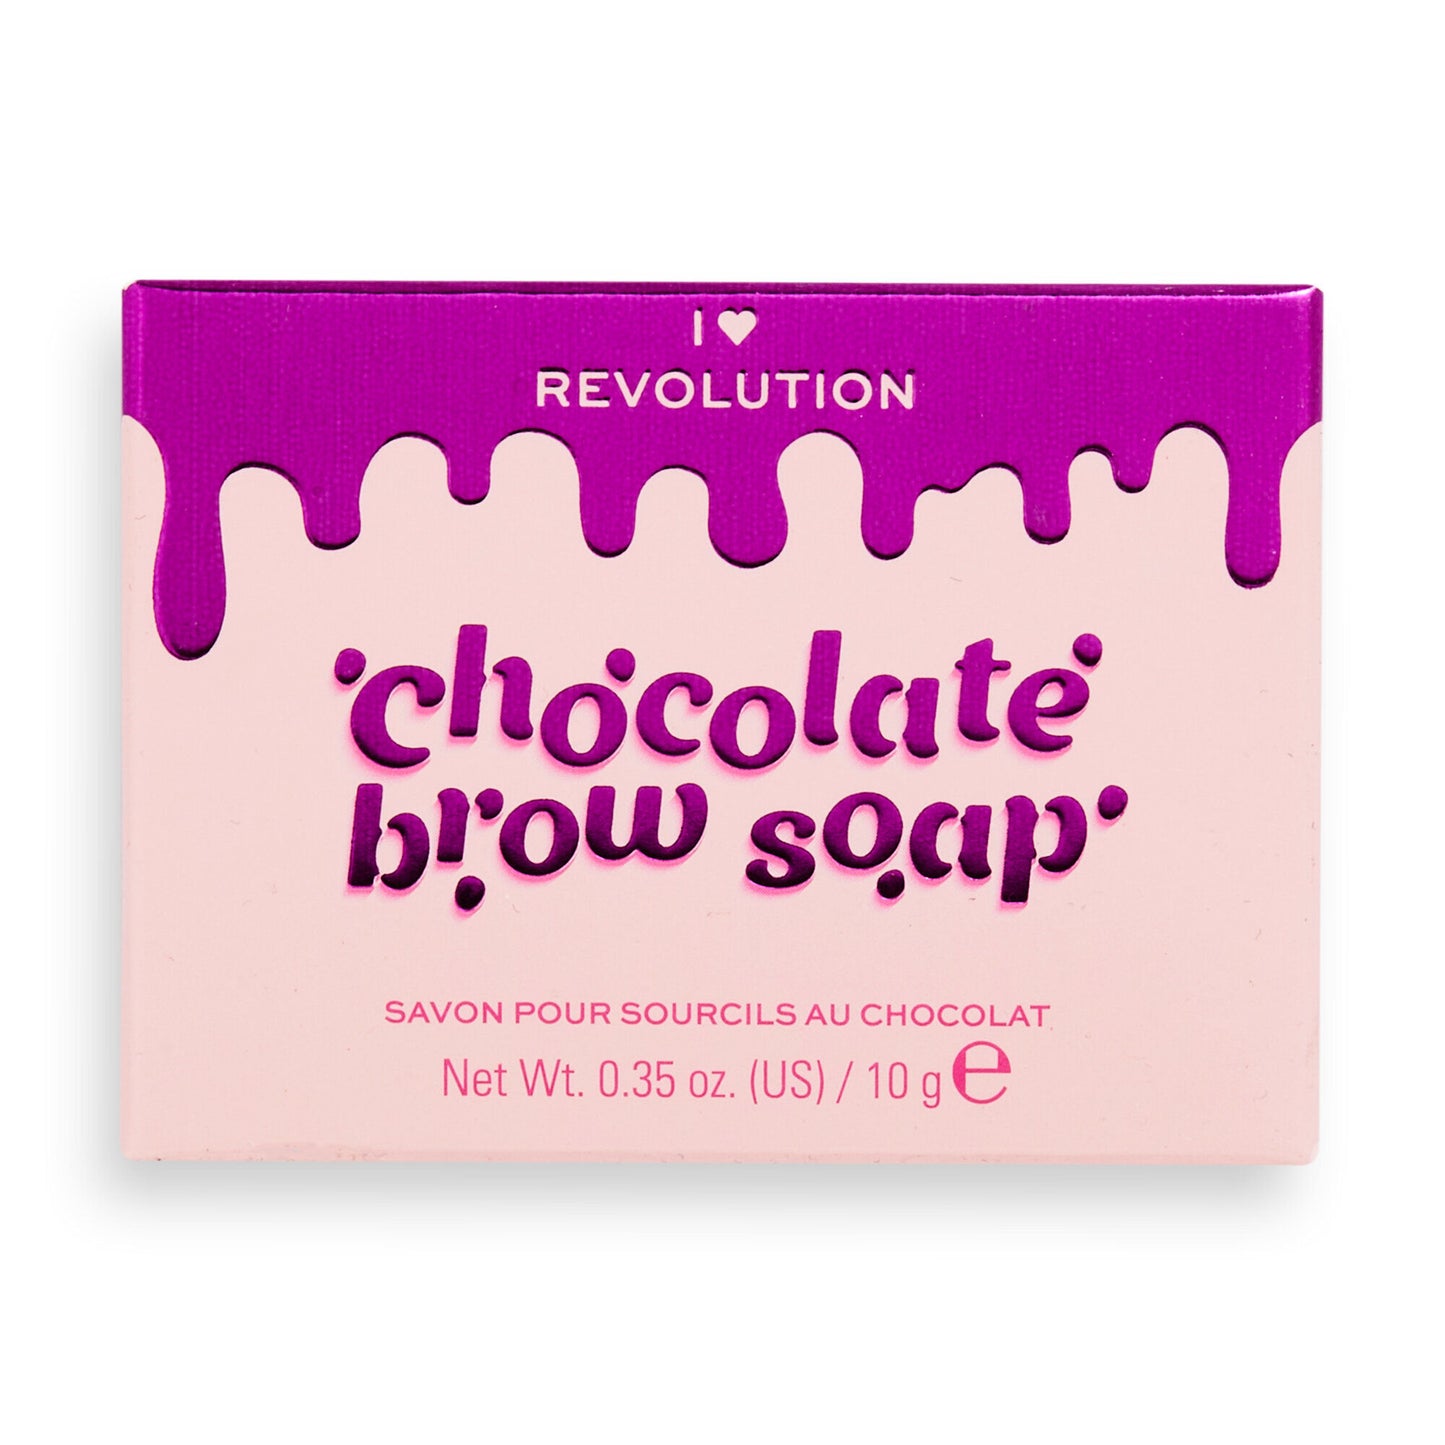 Revolution I Heart Revolution Chocolate Brow Soap